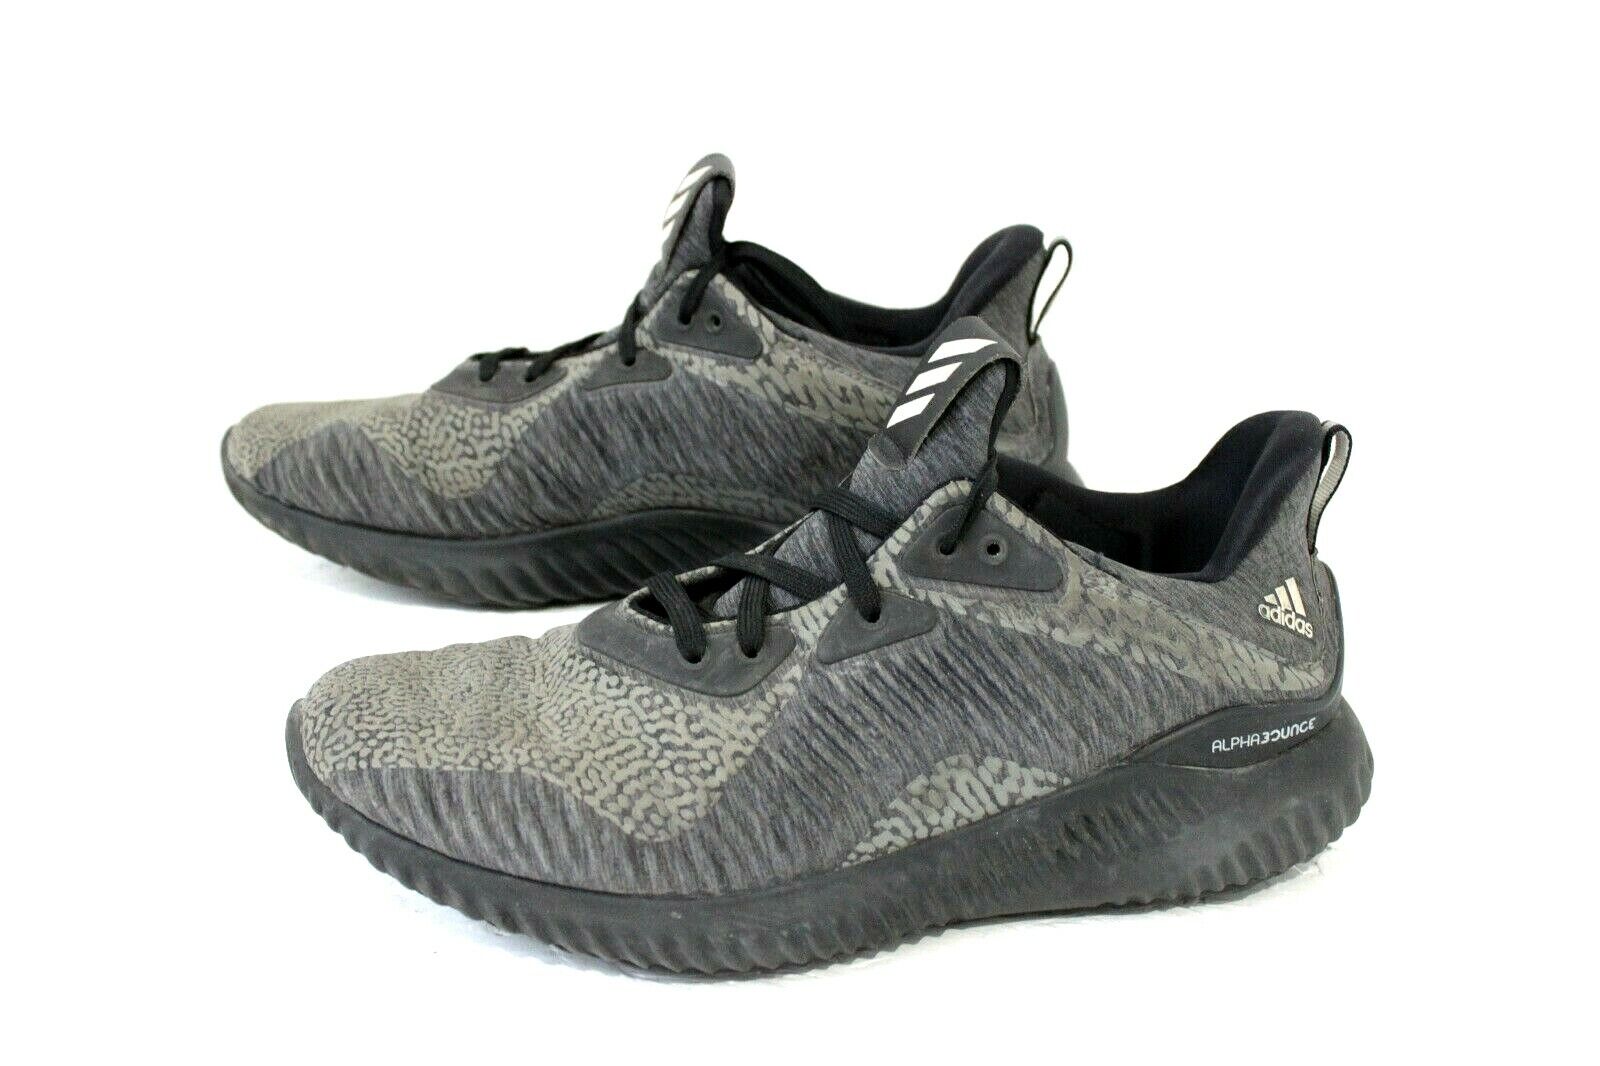 Raincoat pocket Unreadable Adidas Alpha bounce 3 Men's Size US 8 Grey/Black Running Shoe DA9561 | eBay